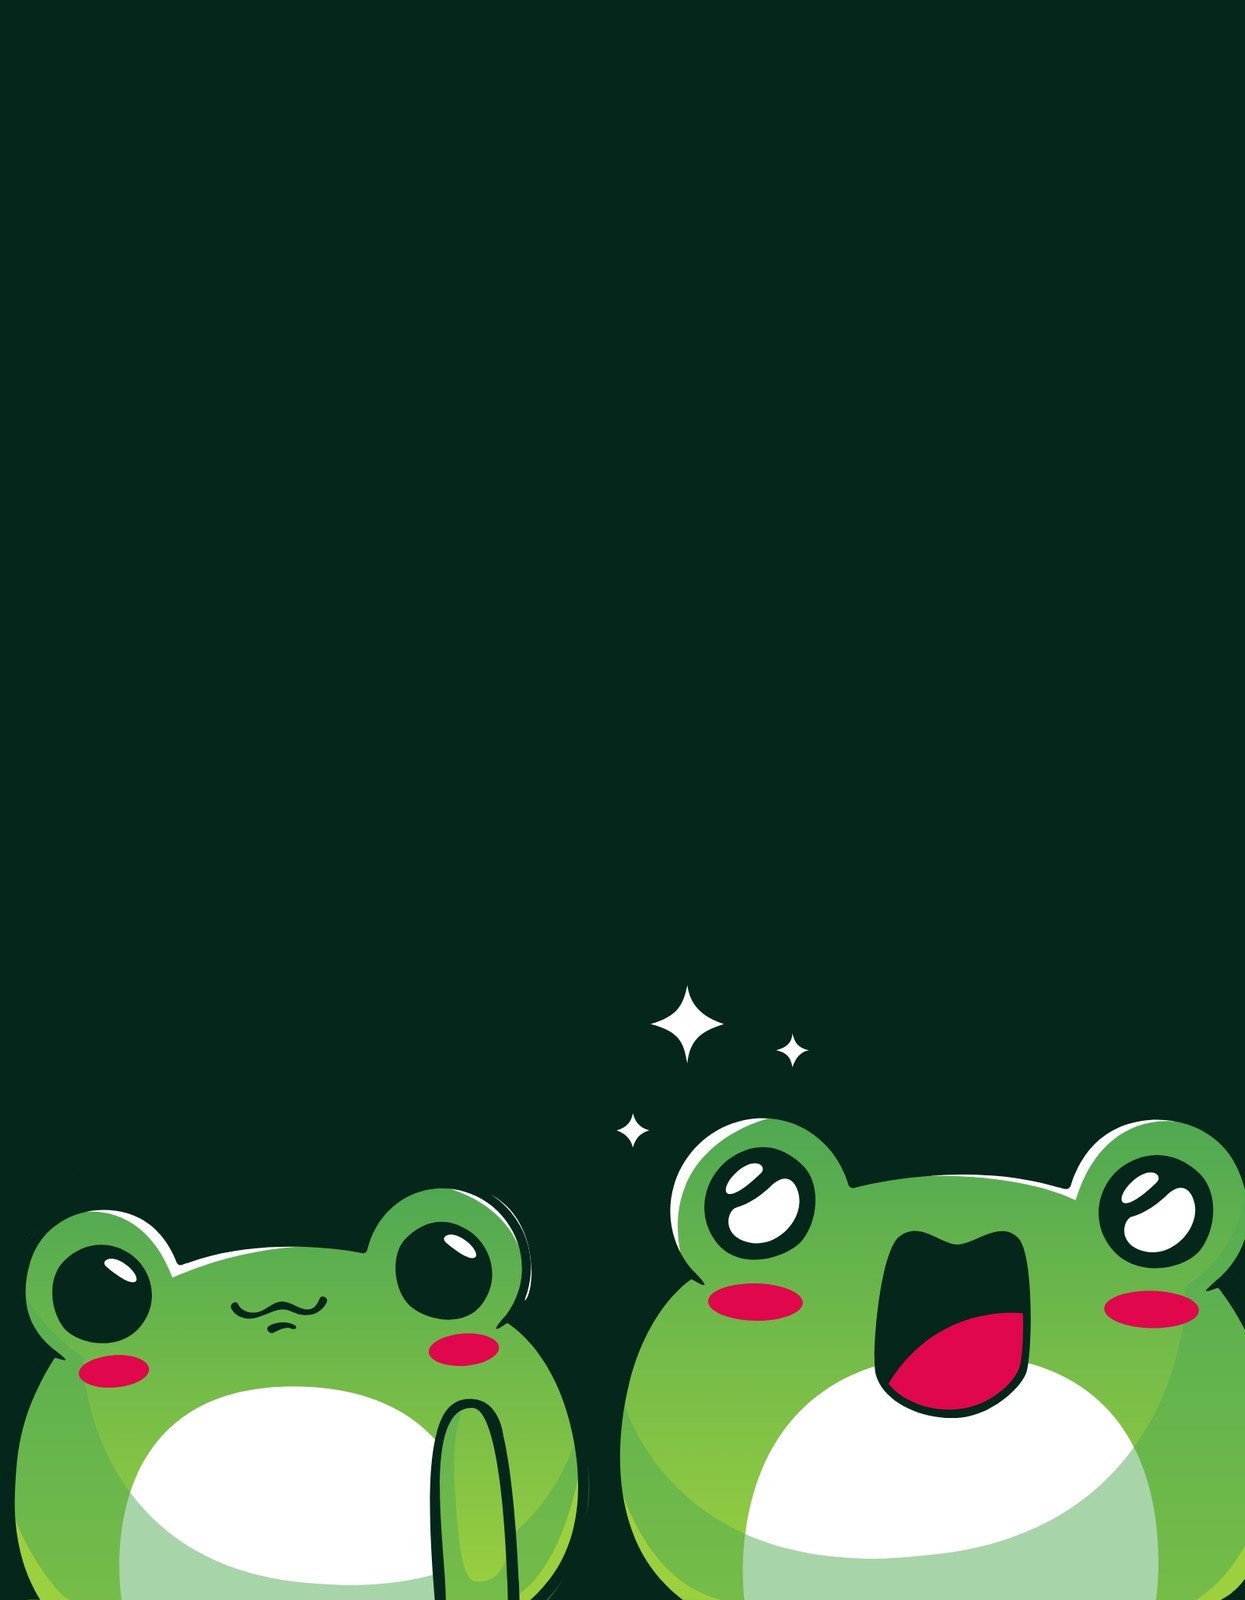 Free download froggy edits Frog wallpaper Cute cartoon wallpapers Frog art  720x1368 for your Desktop Mobile  Tablet  Explore 24 Cartoon Frog  iPhone Wallpapers  Cartoon Frog Wallpaper Frog Backgrounds Frog Wallpaper